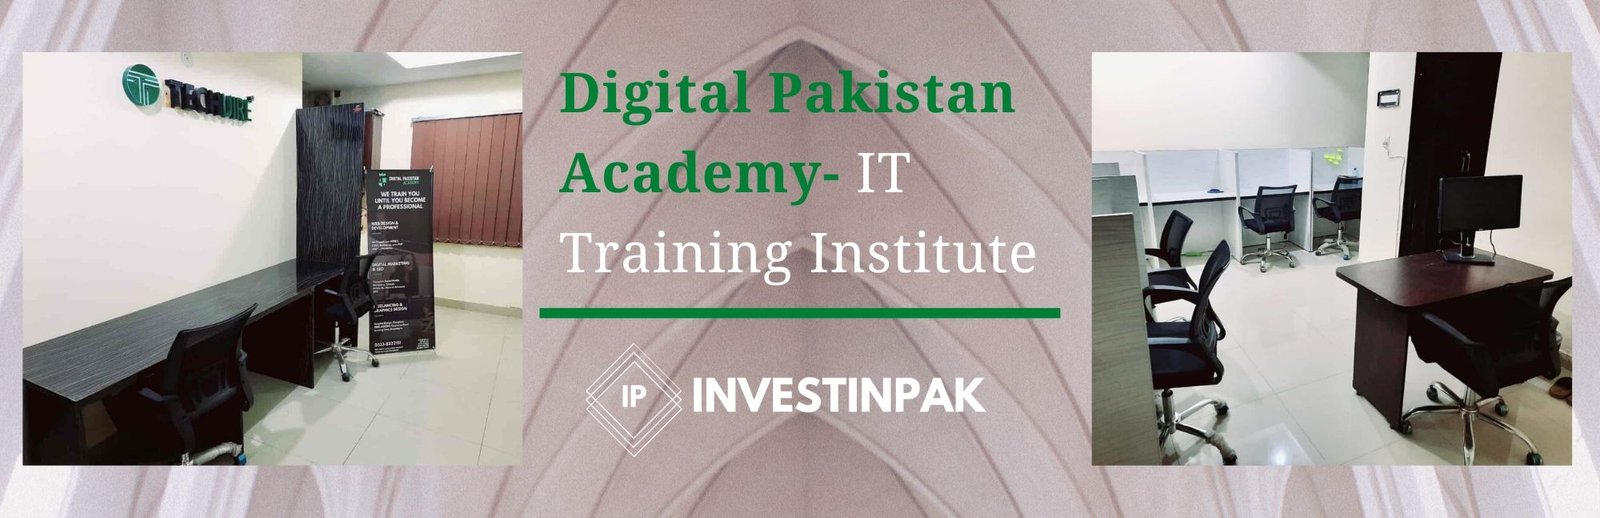 digital pakistan academy